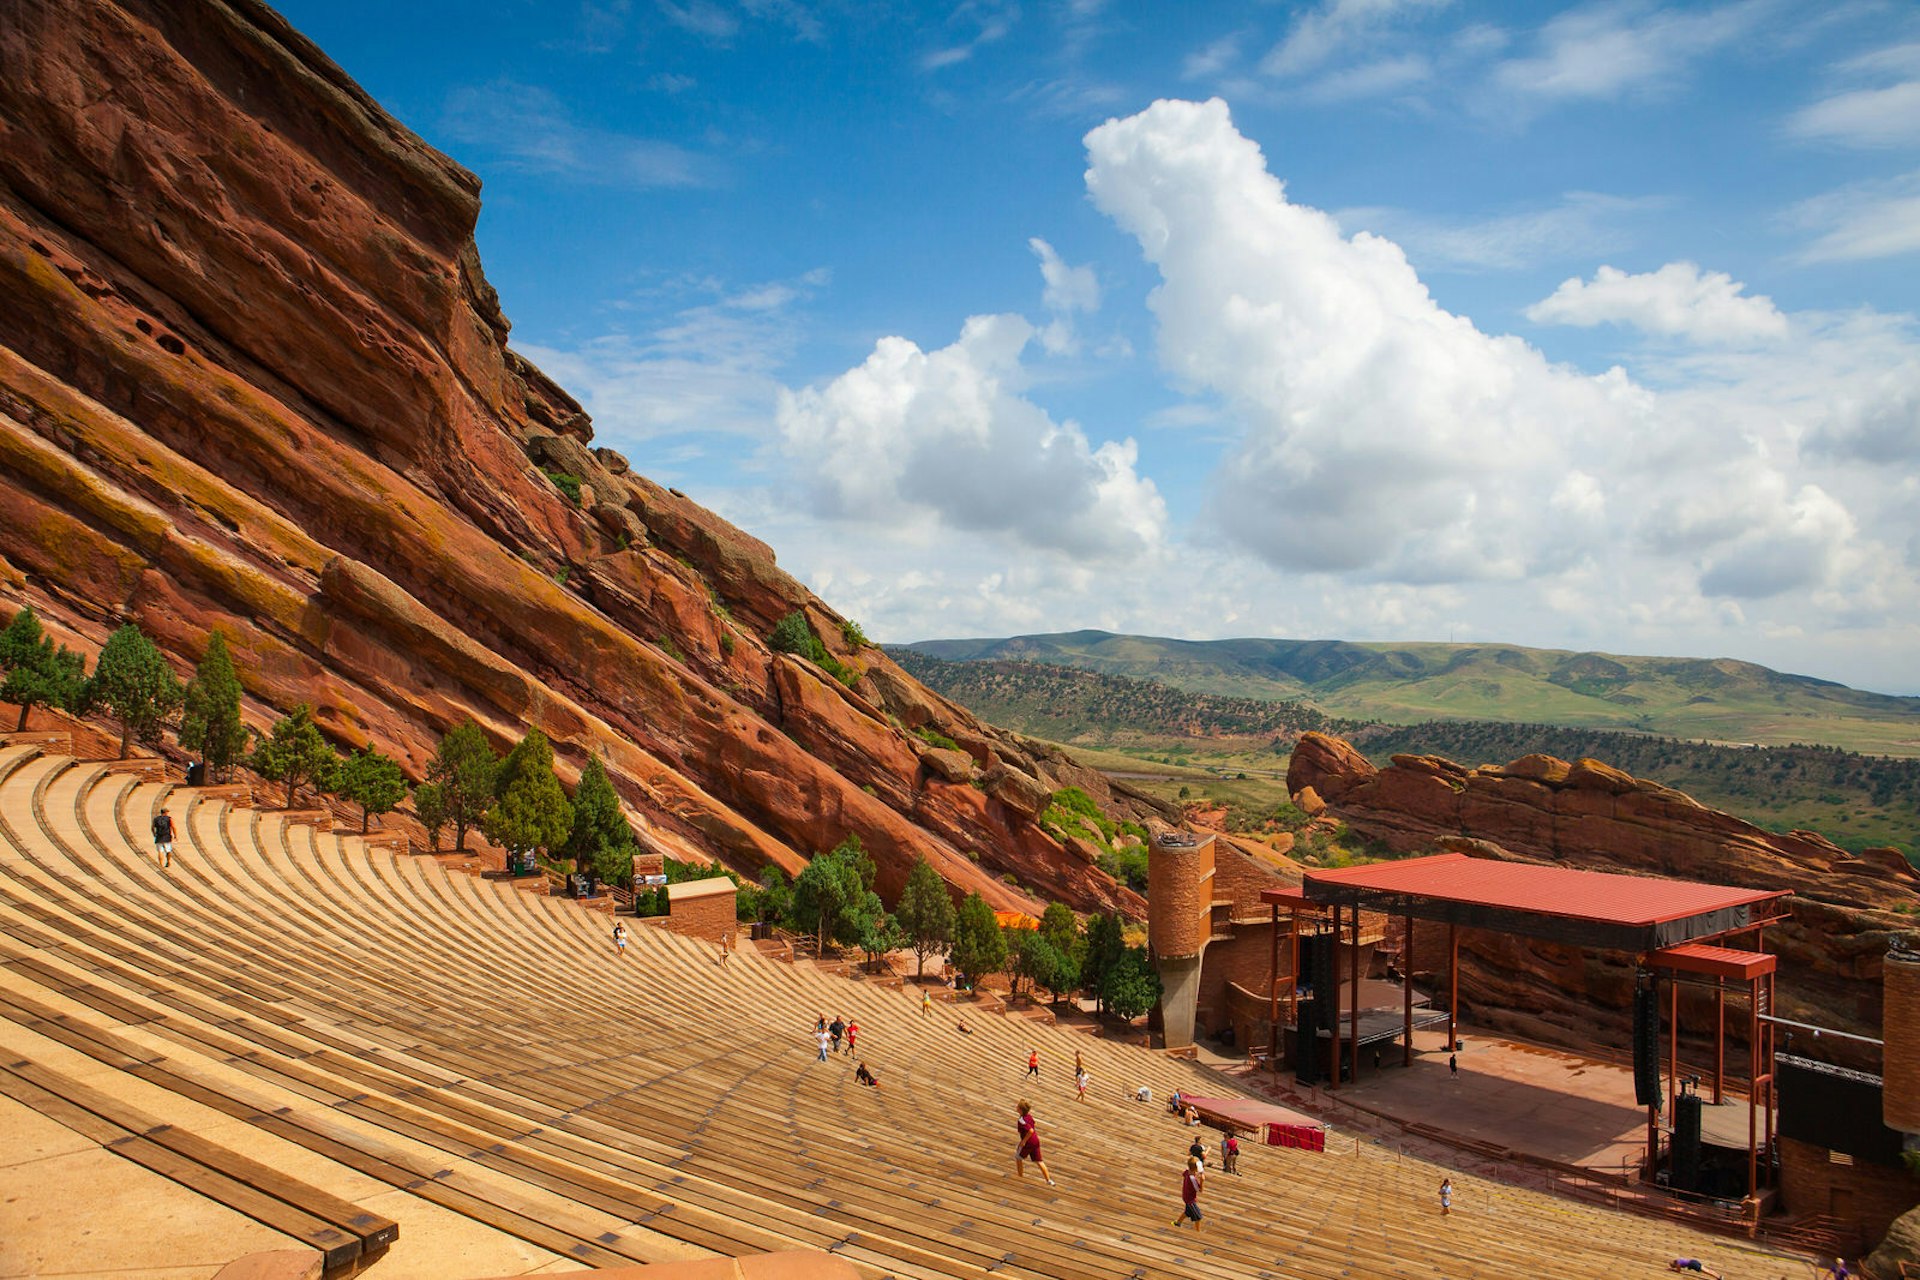 Red Rocks Amphitheatre, a concert venue built into a rocky hilltop 